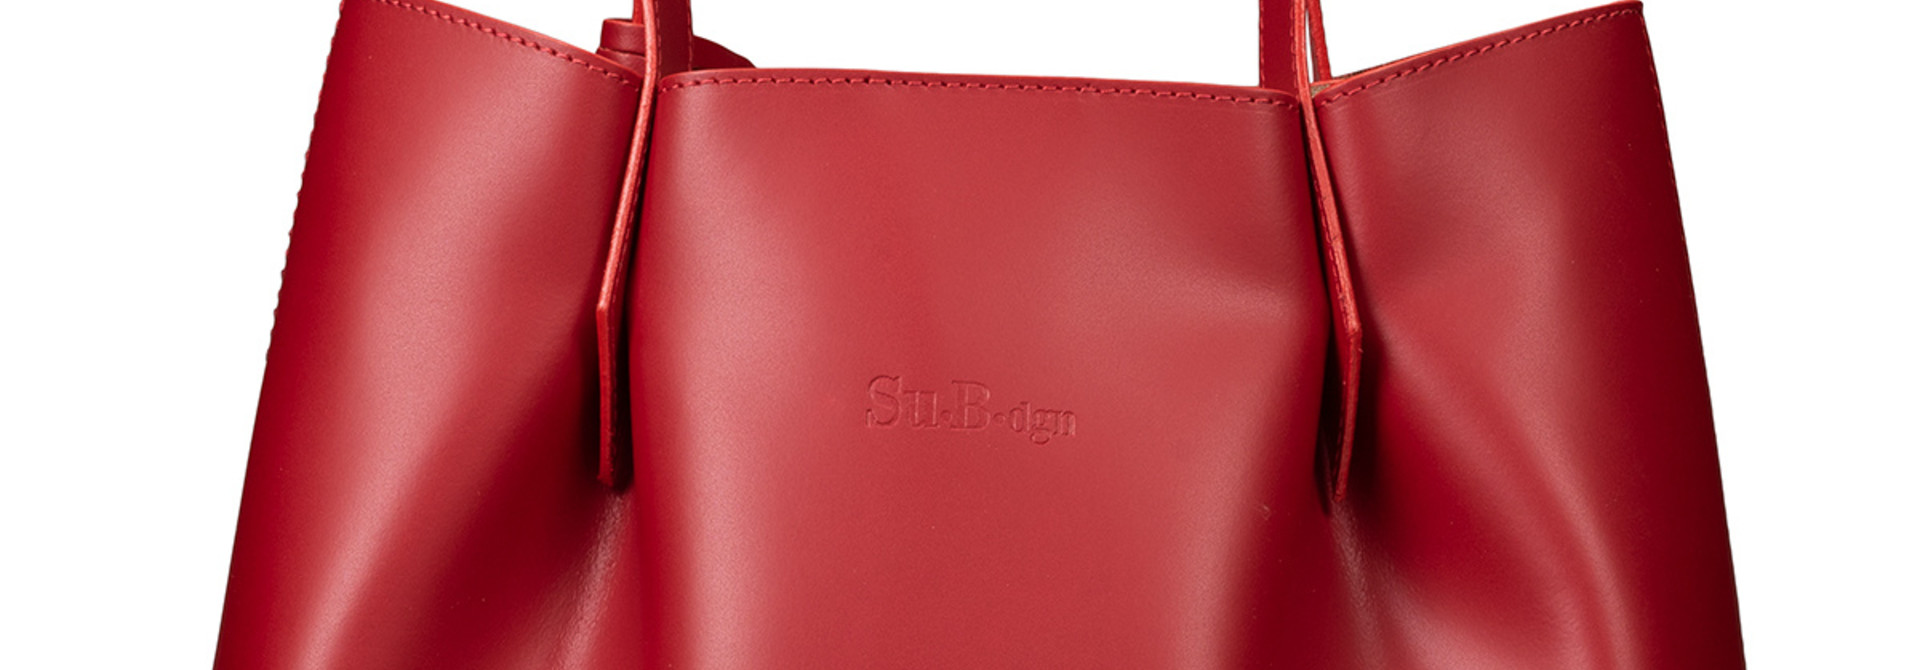 Luxurious Leather tote for women - shoulder bag, shopping bag - shopper - handbag  - Red